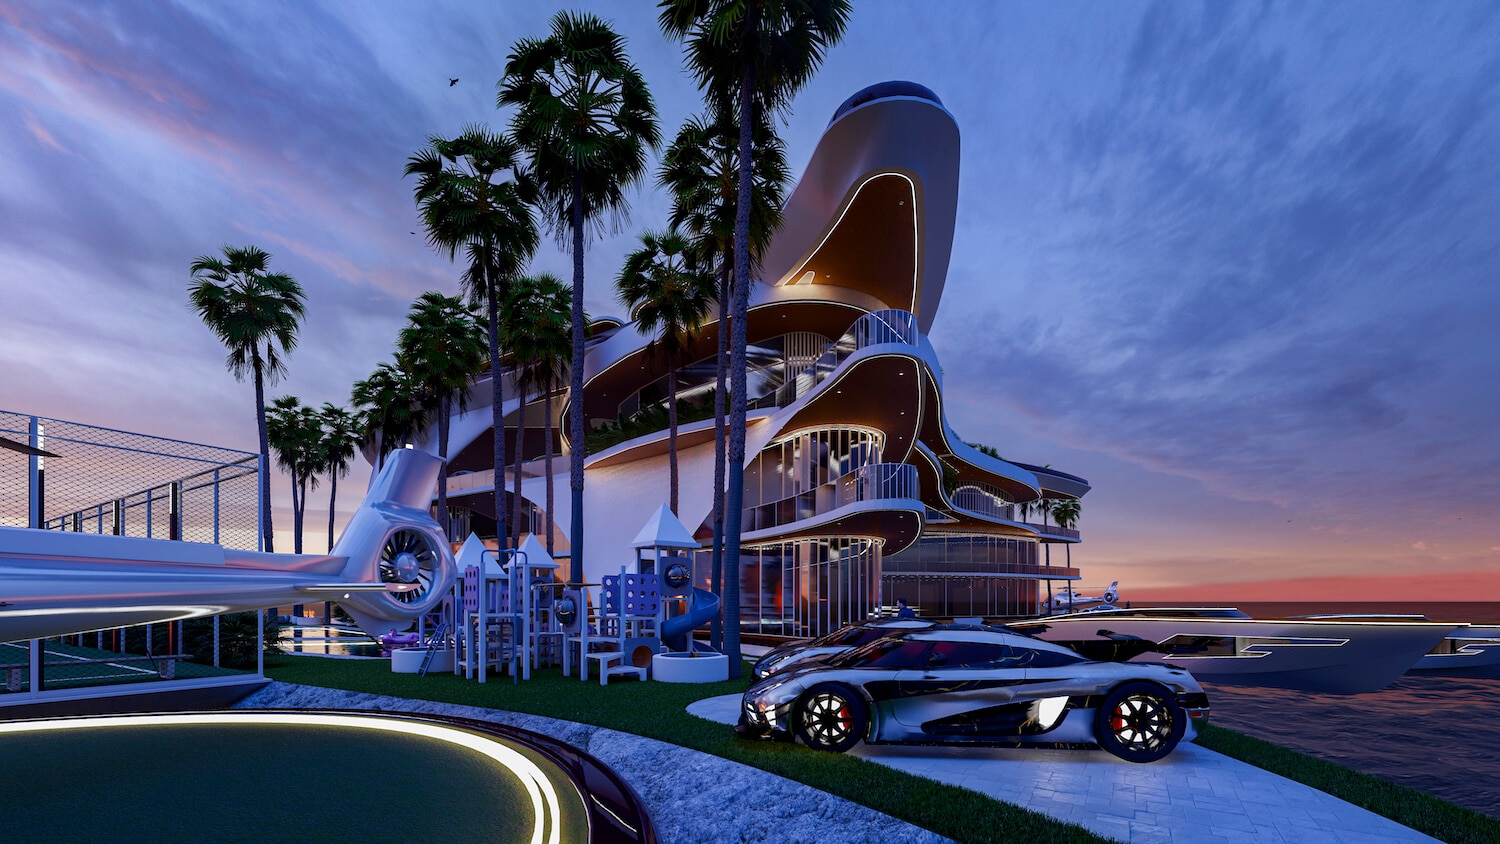 Insane 50m concept mansion for Lionel Messi revealed